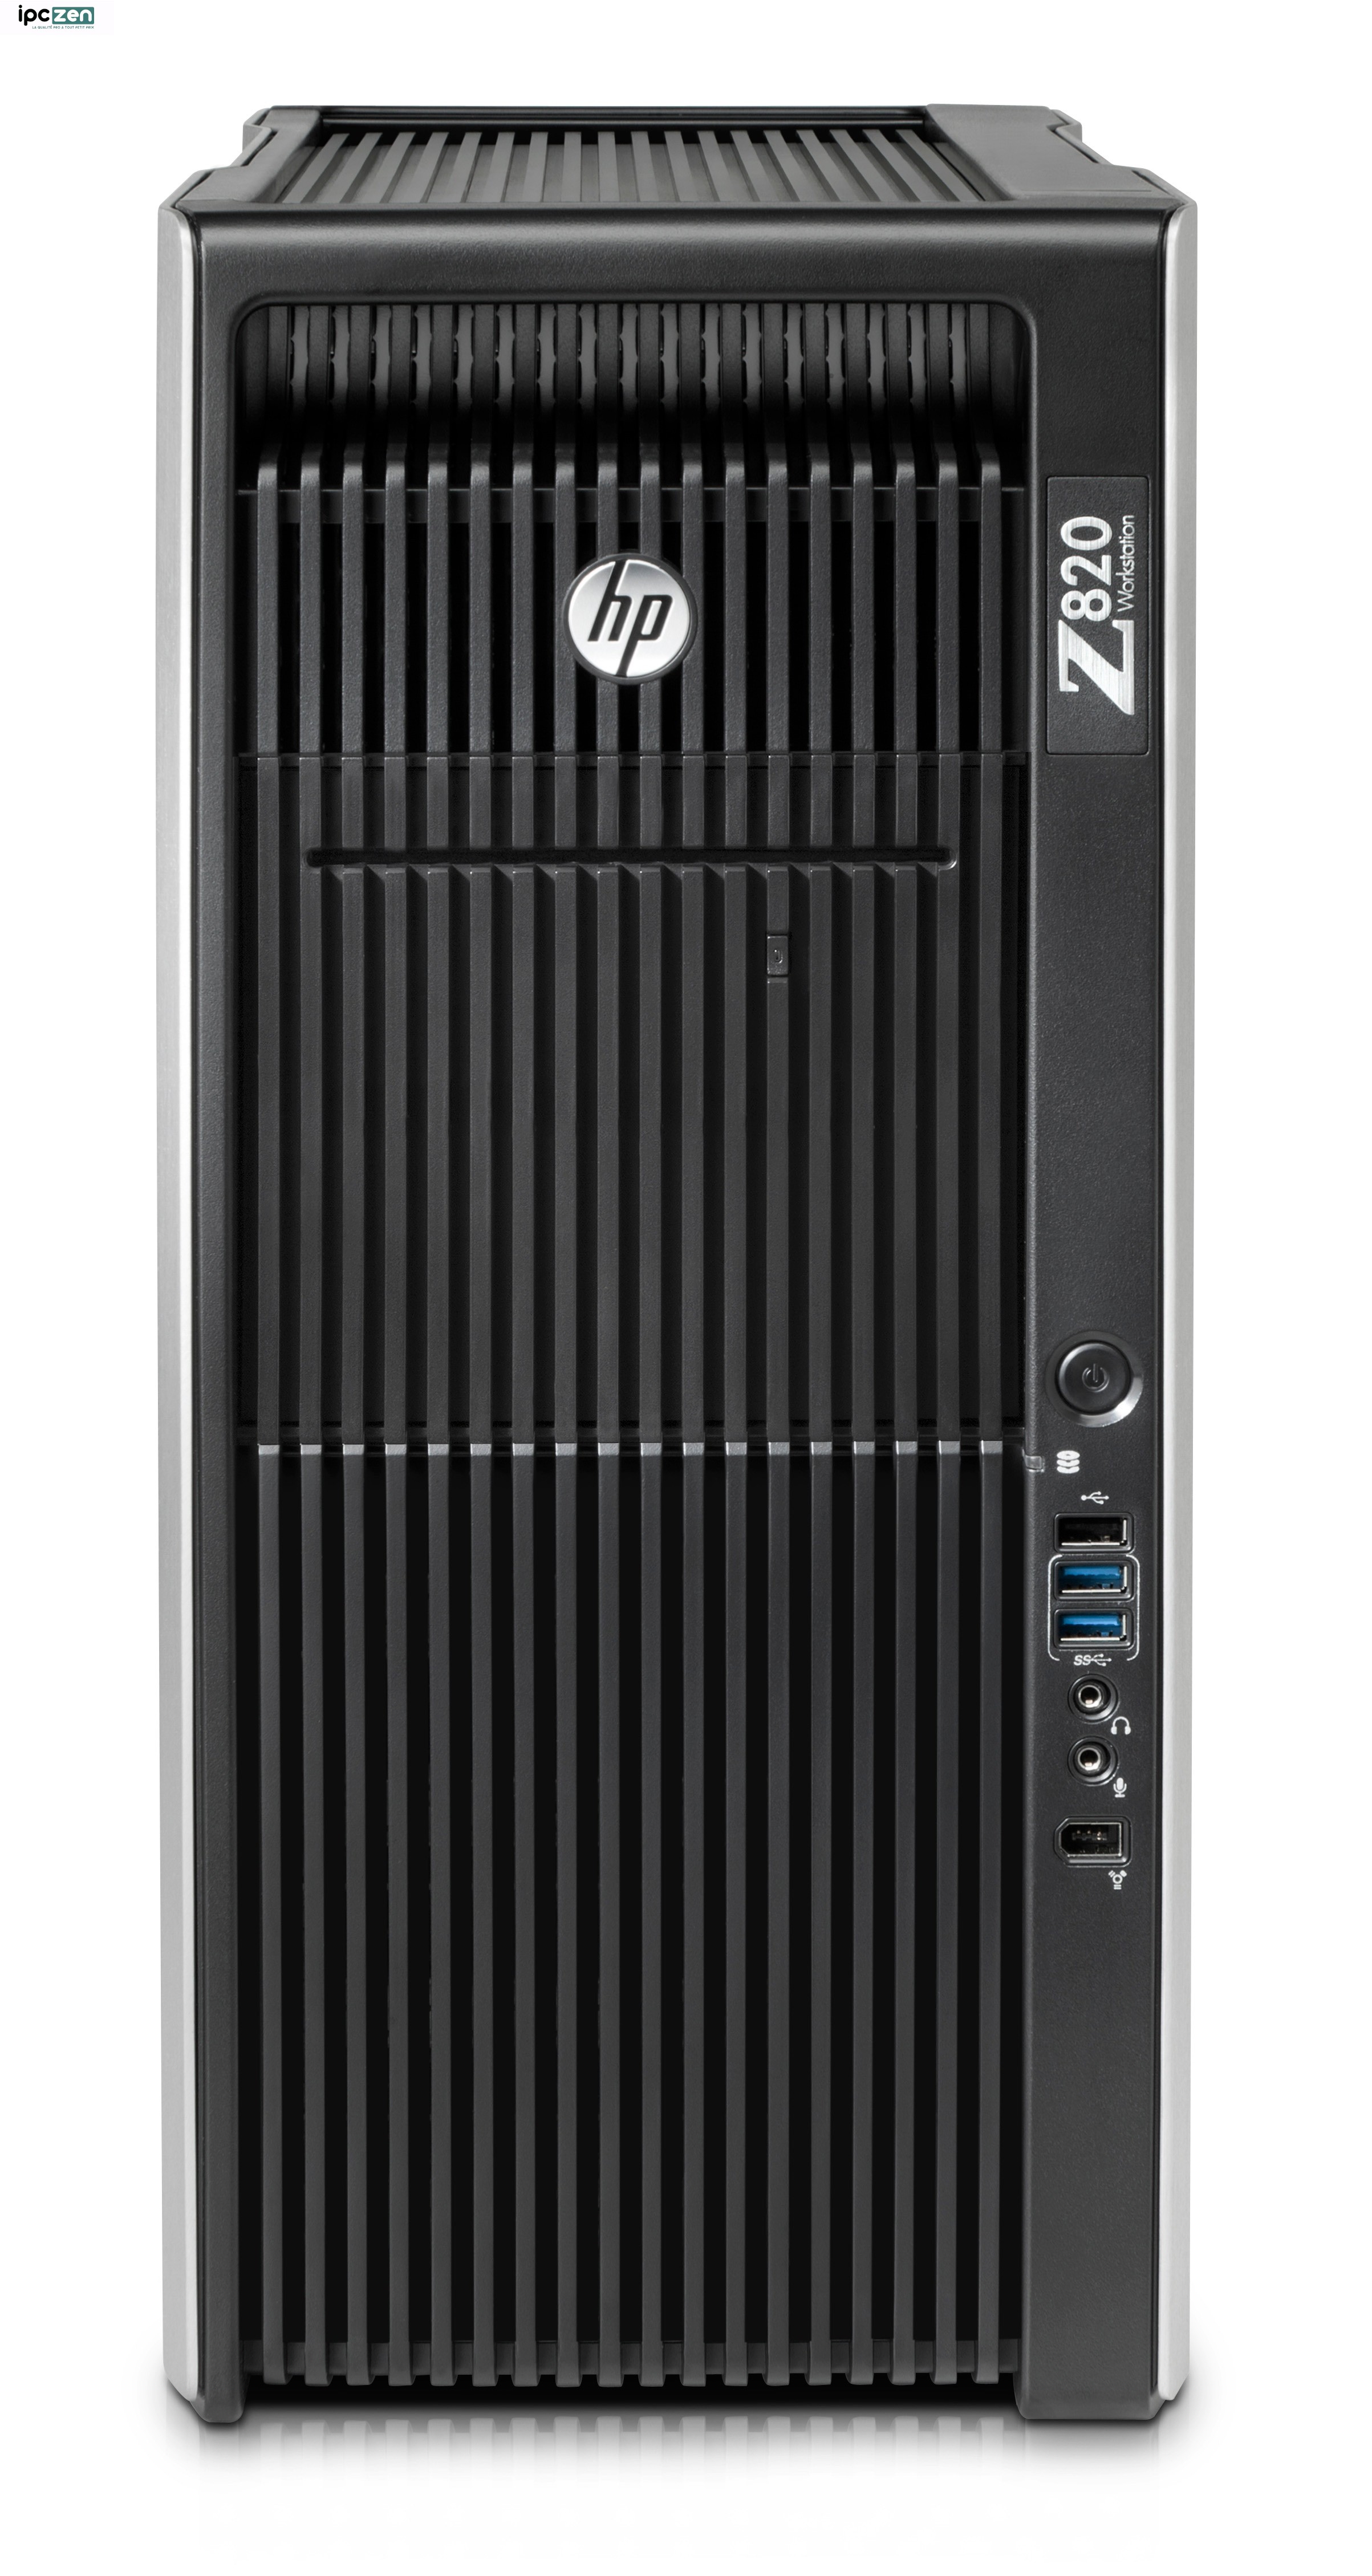 Station de travail reconditionnée HP Z820 Intel Xeon E5-2643 3,3 GHz